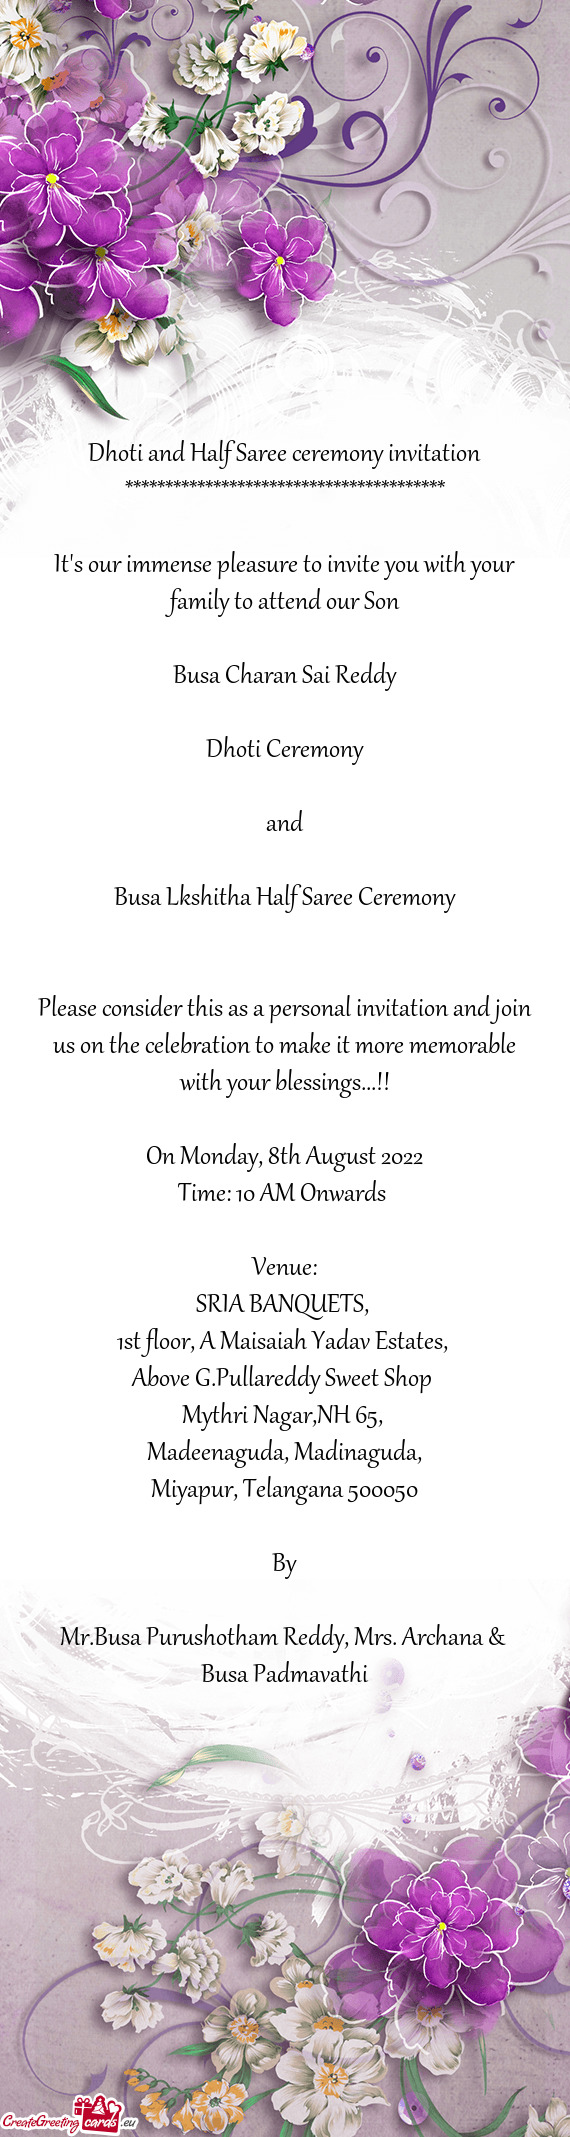 Busa Lkshitha Half Saree Ceremony